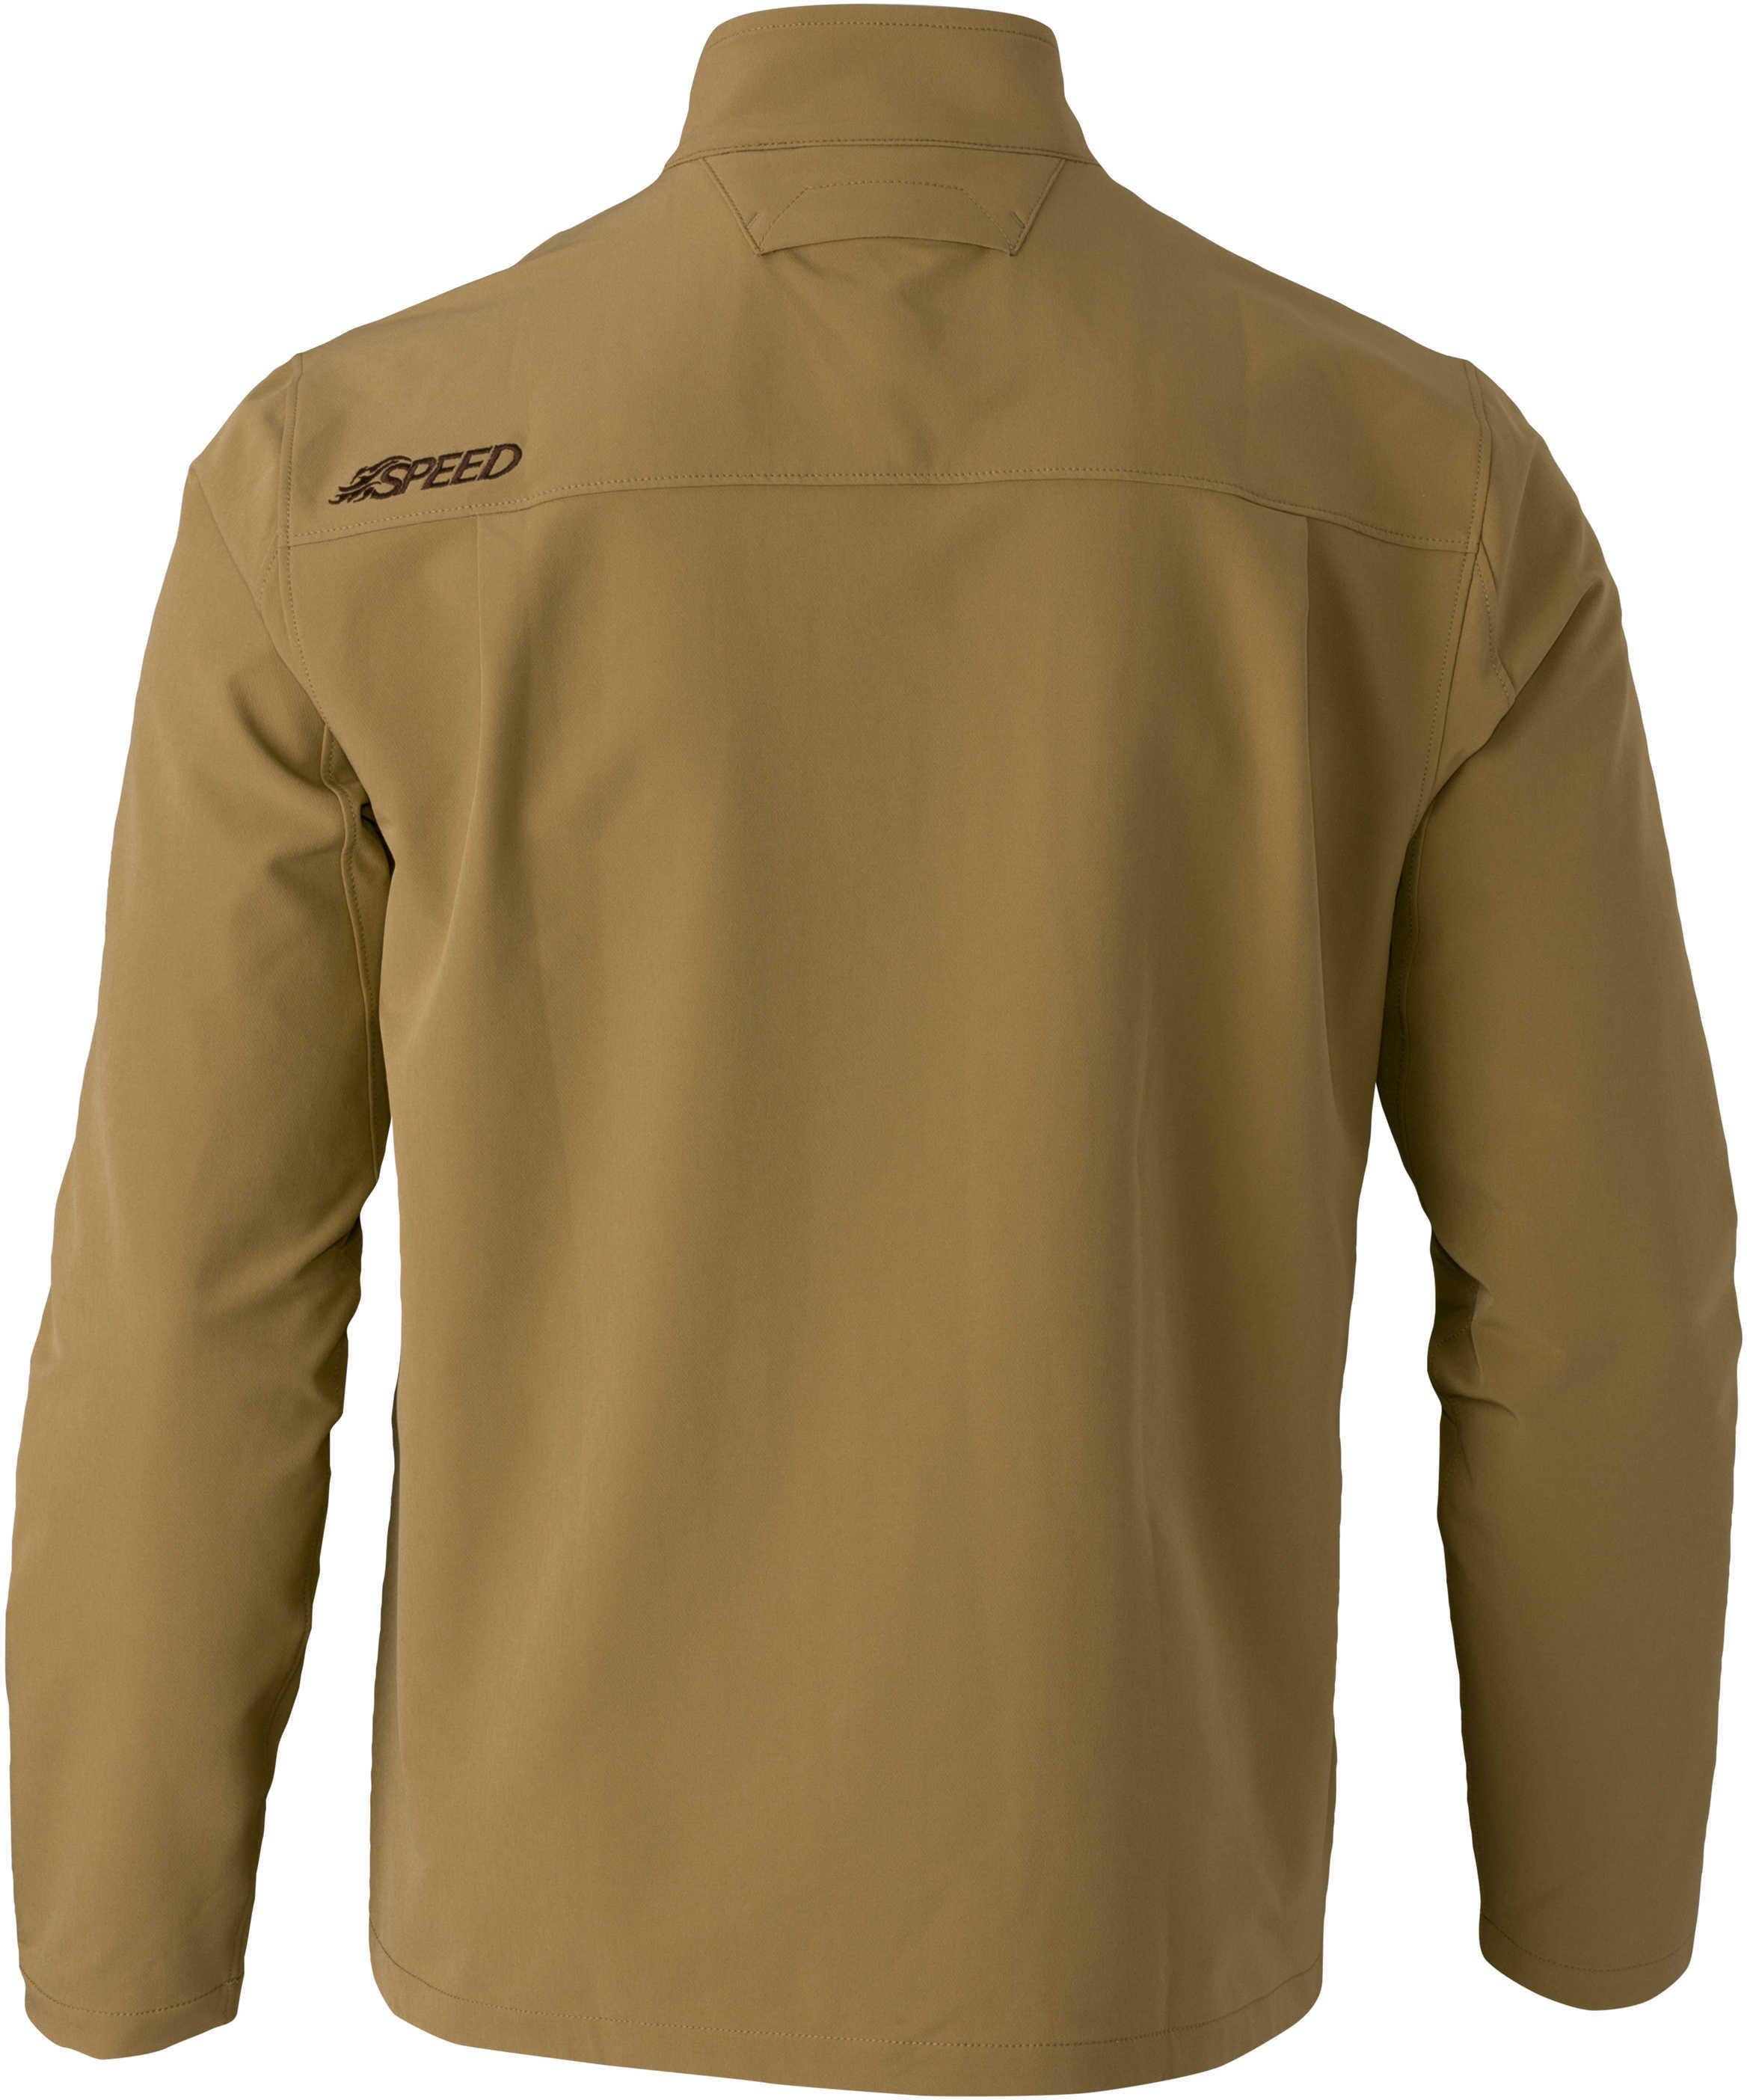 Browning Hell's Canyon Speed Javelin Jacket Tan, Medium Md: 3048306802